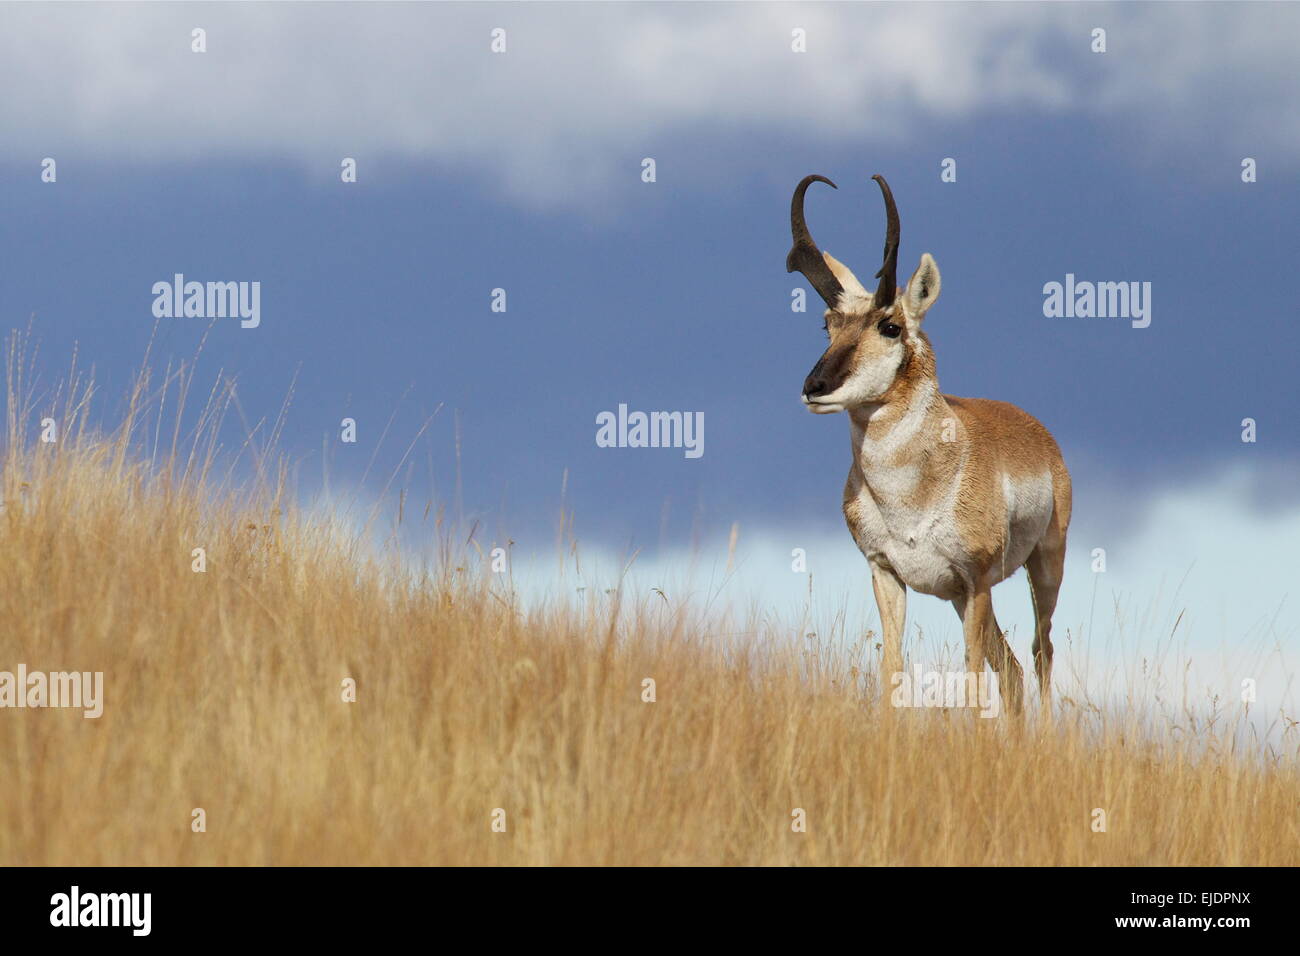 Pronghorn antelope, Antilocapra americana, in Great Plains prairie habitat prativi con scuri drammatici blu cielo tempestoso Foto Stock